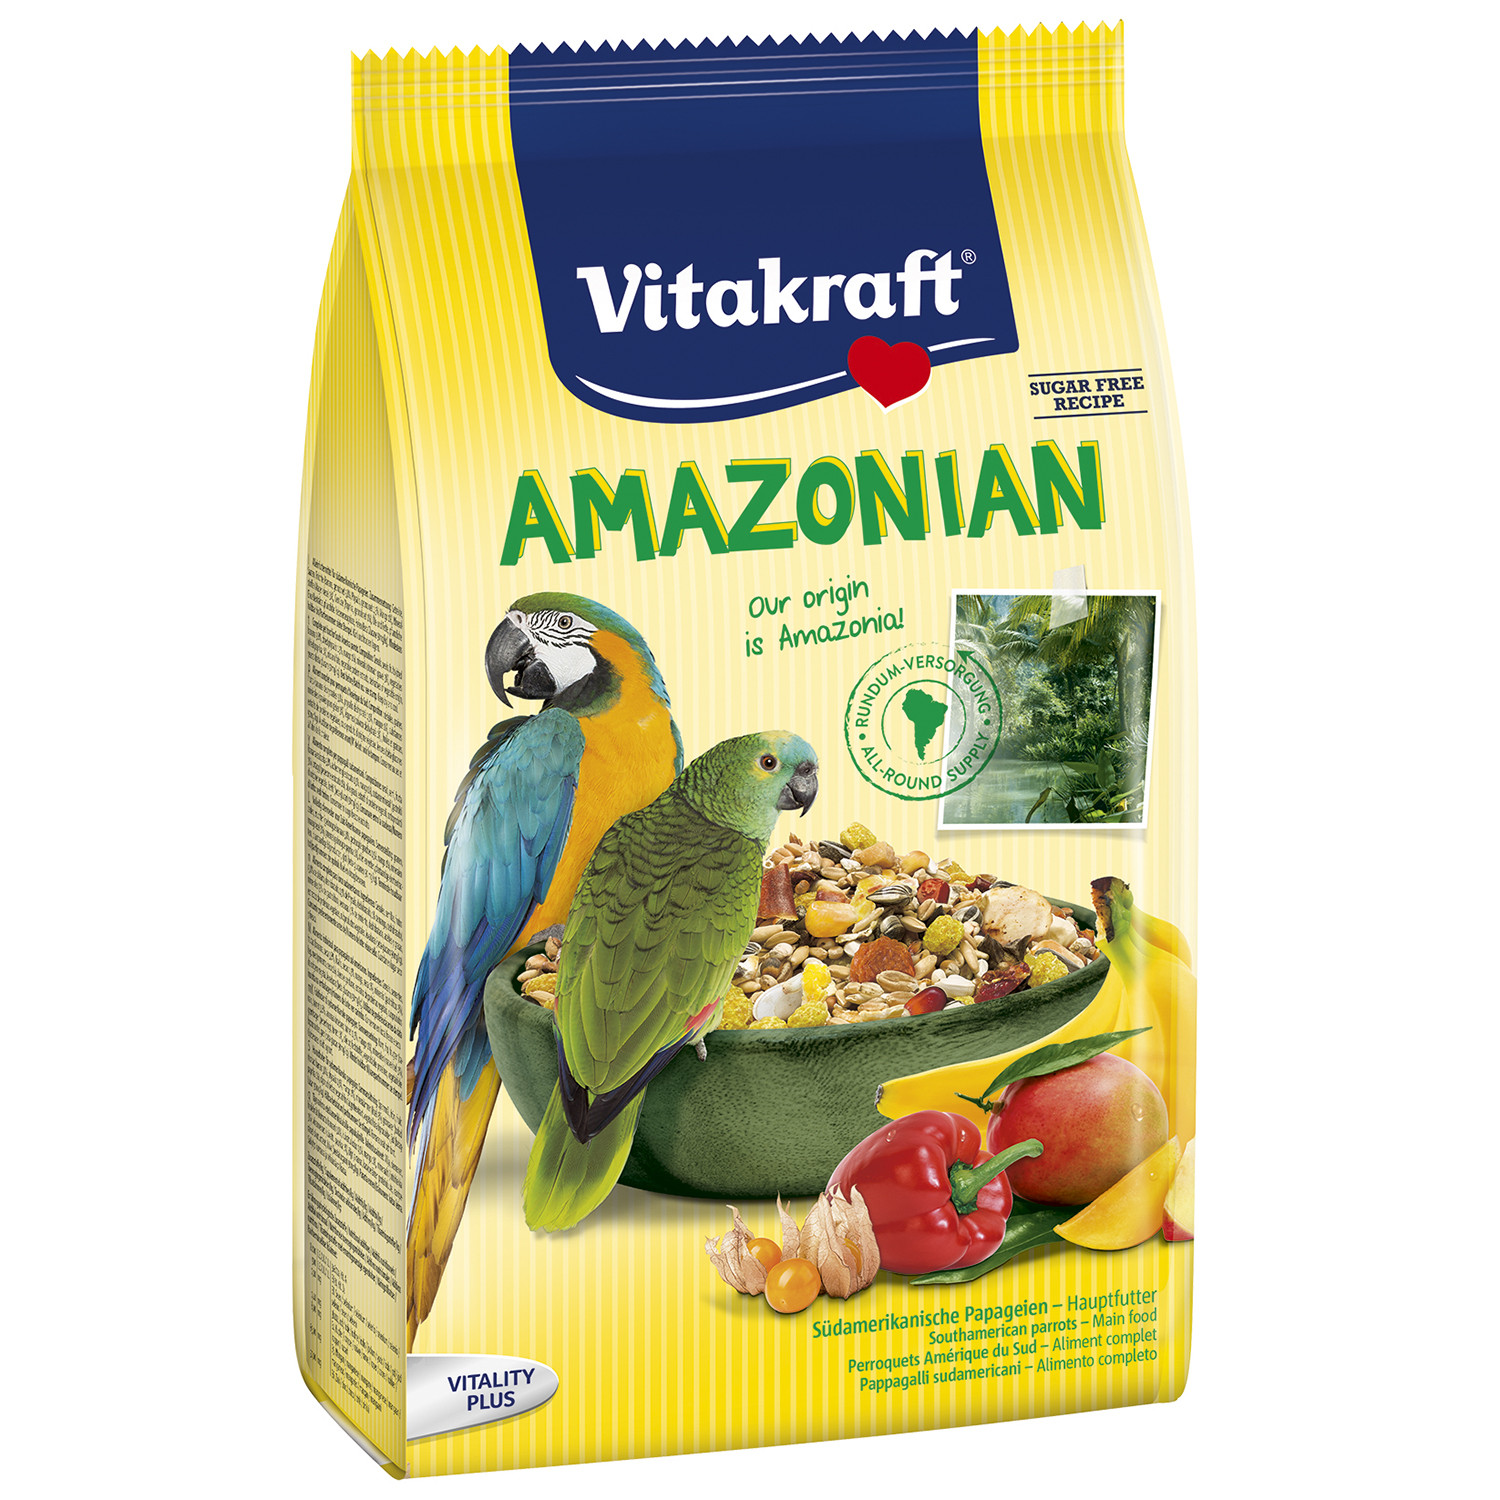 Vitakraft Amazonian Parrot Food 750g Image